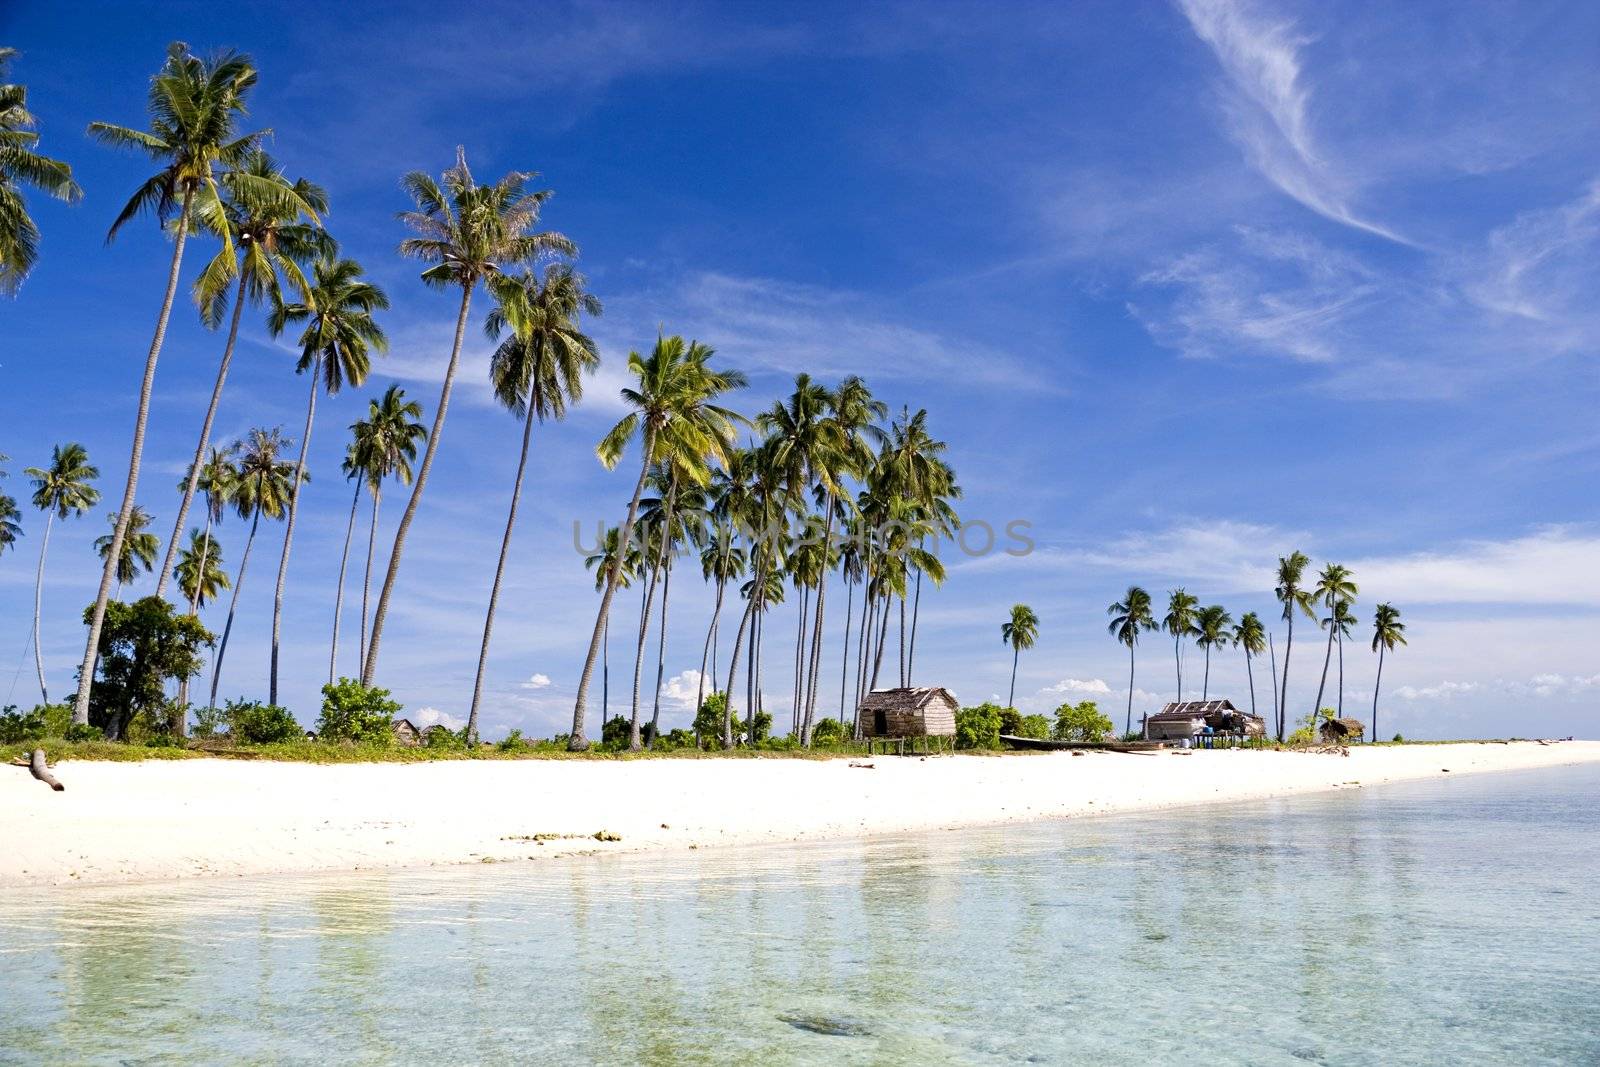 Tropical Island Paradise by shariffc